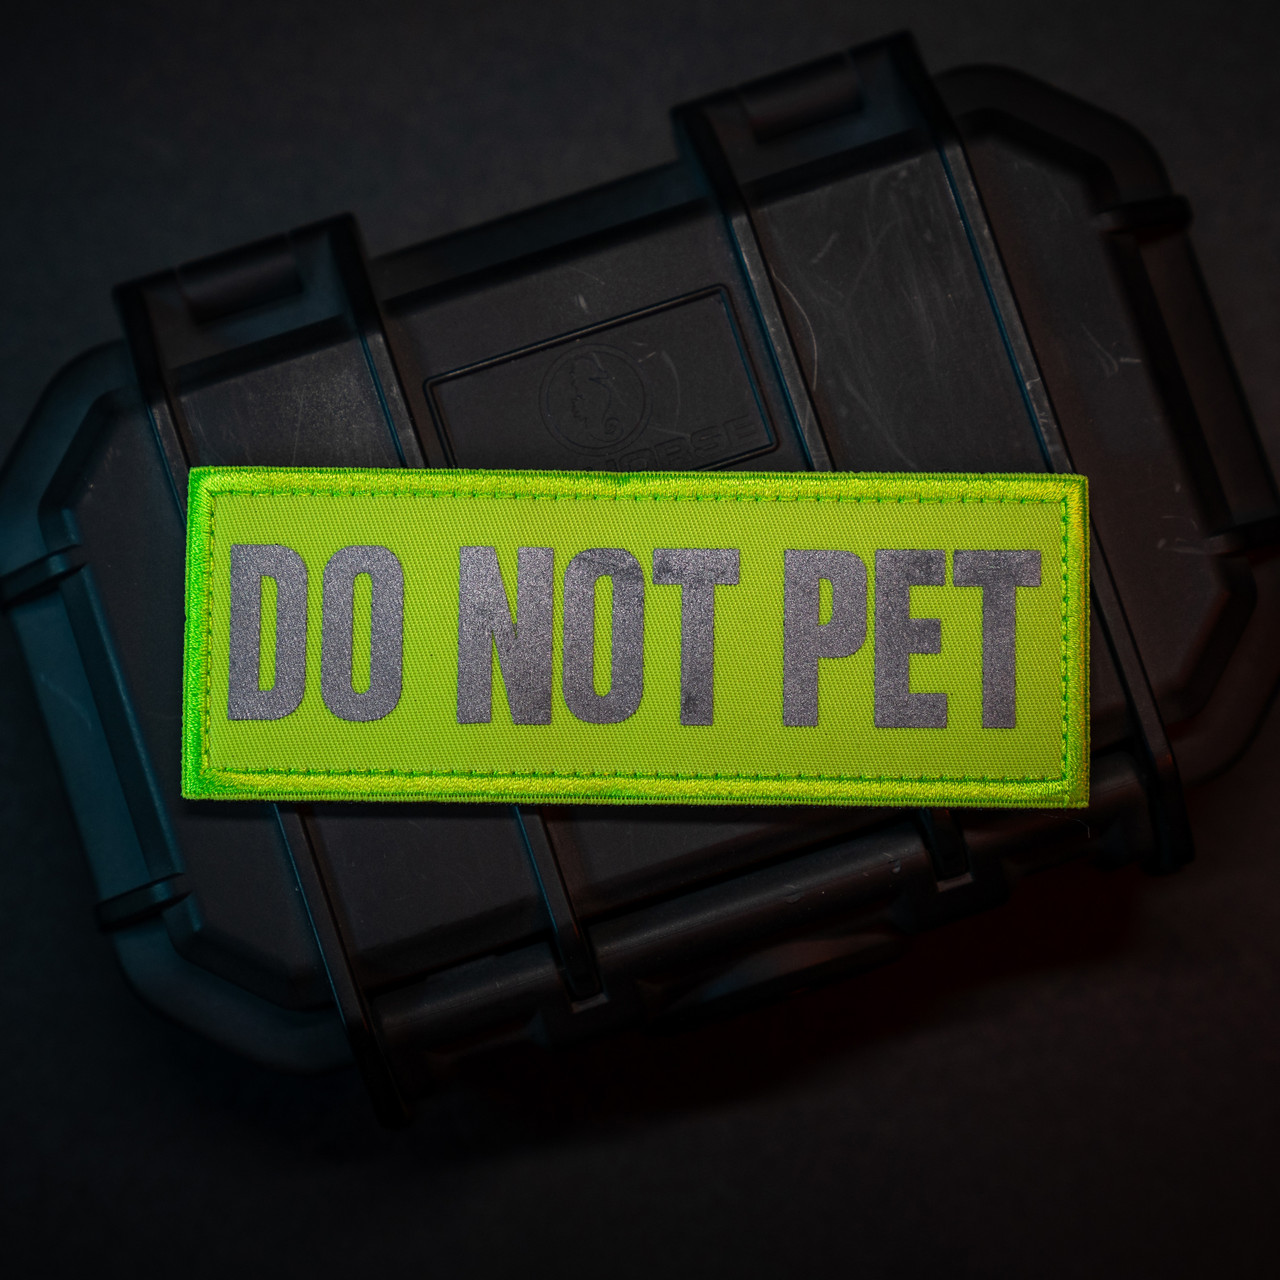 Do Not Pet Reflective Patch